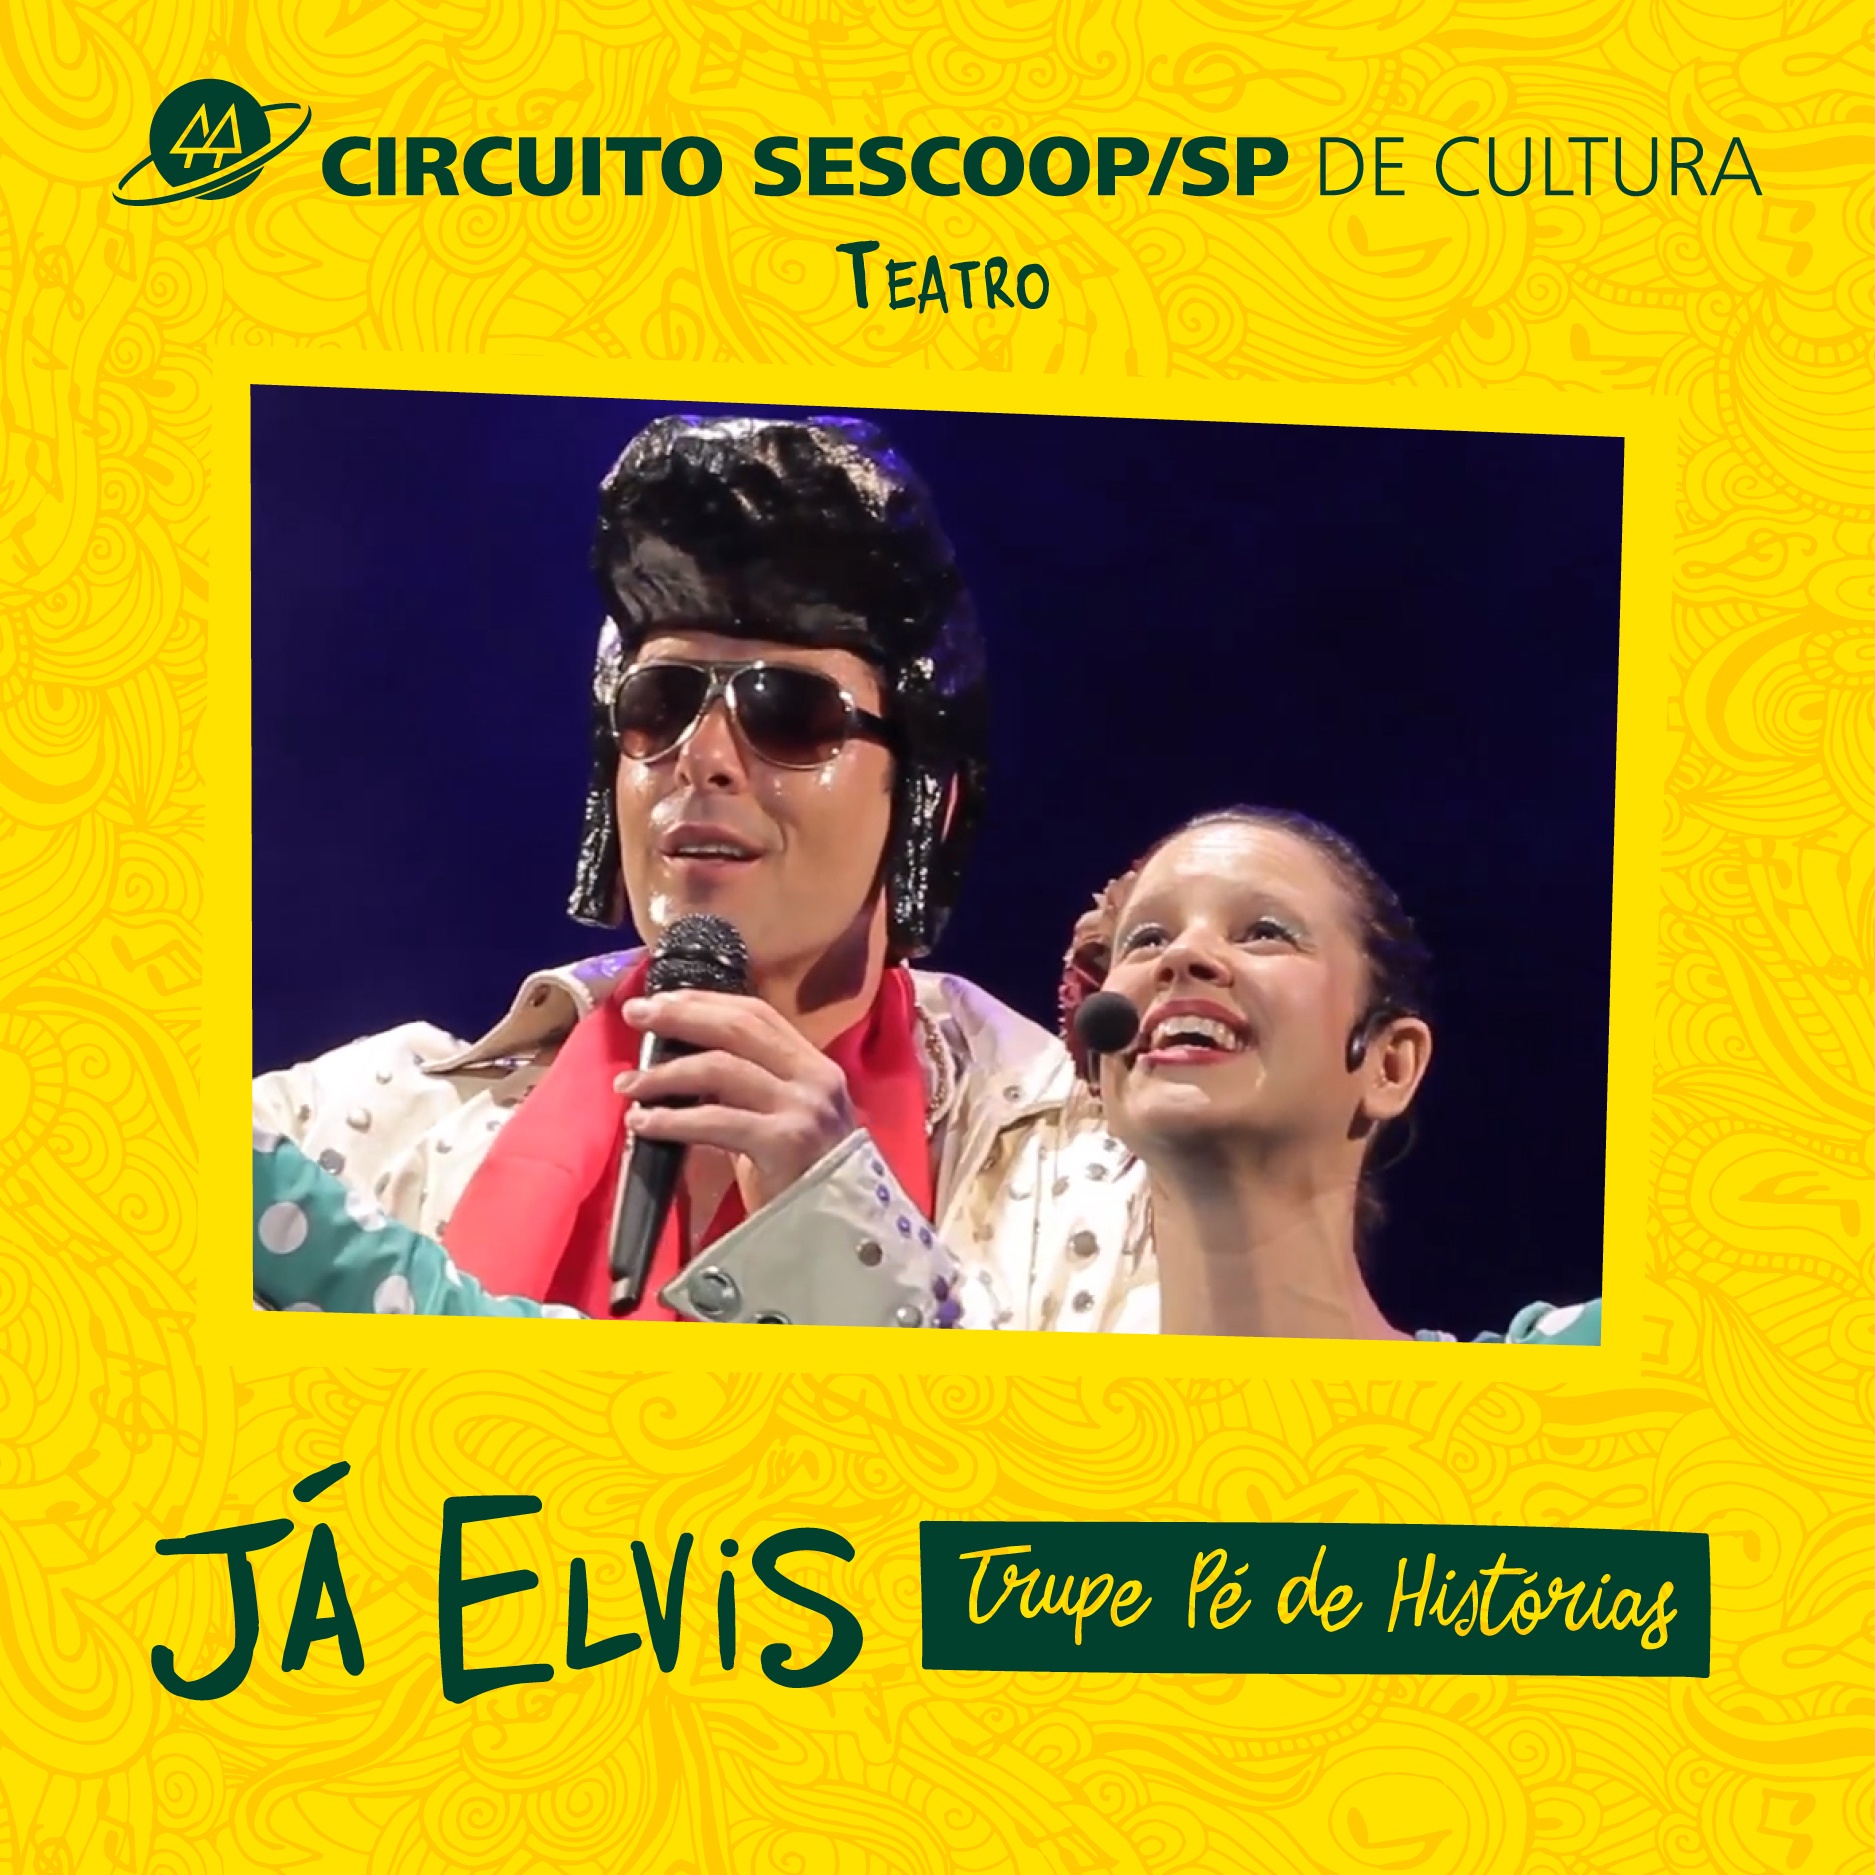 Circuito Sescoop/SP de Cultura leva o espetáculo "Já Elvis" a Andradina